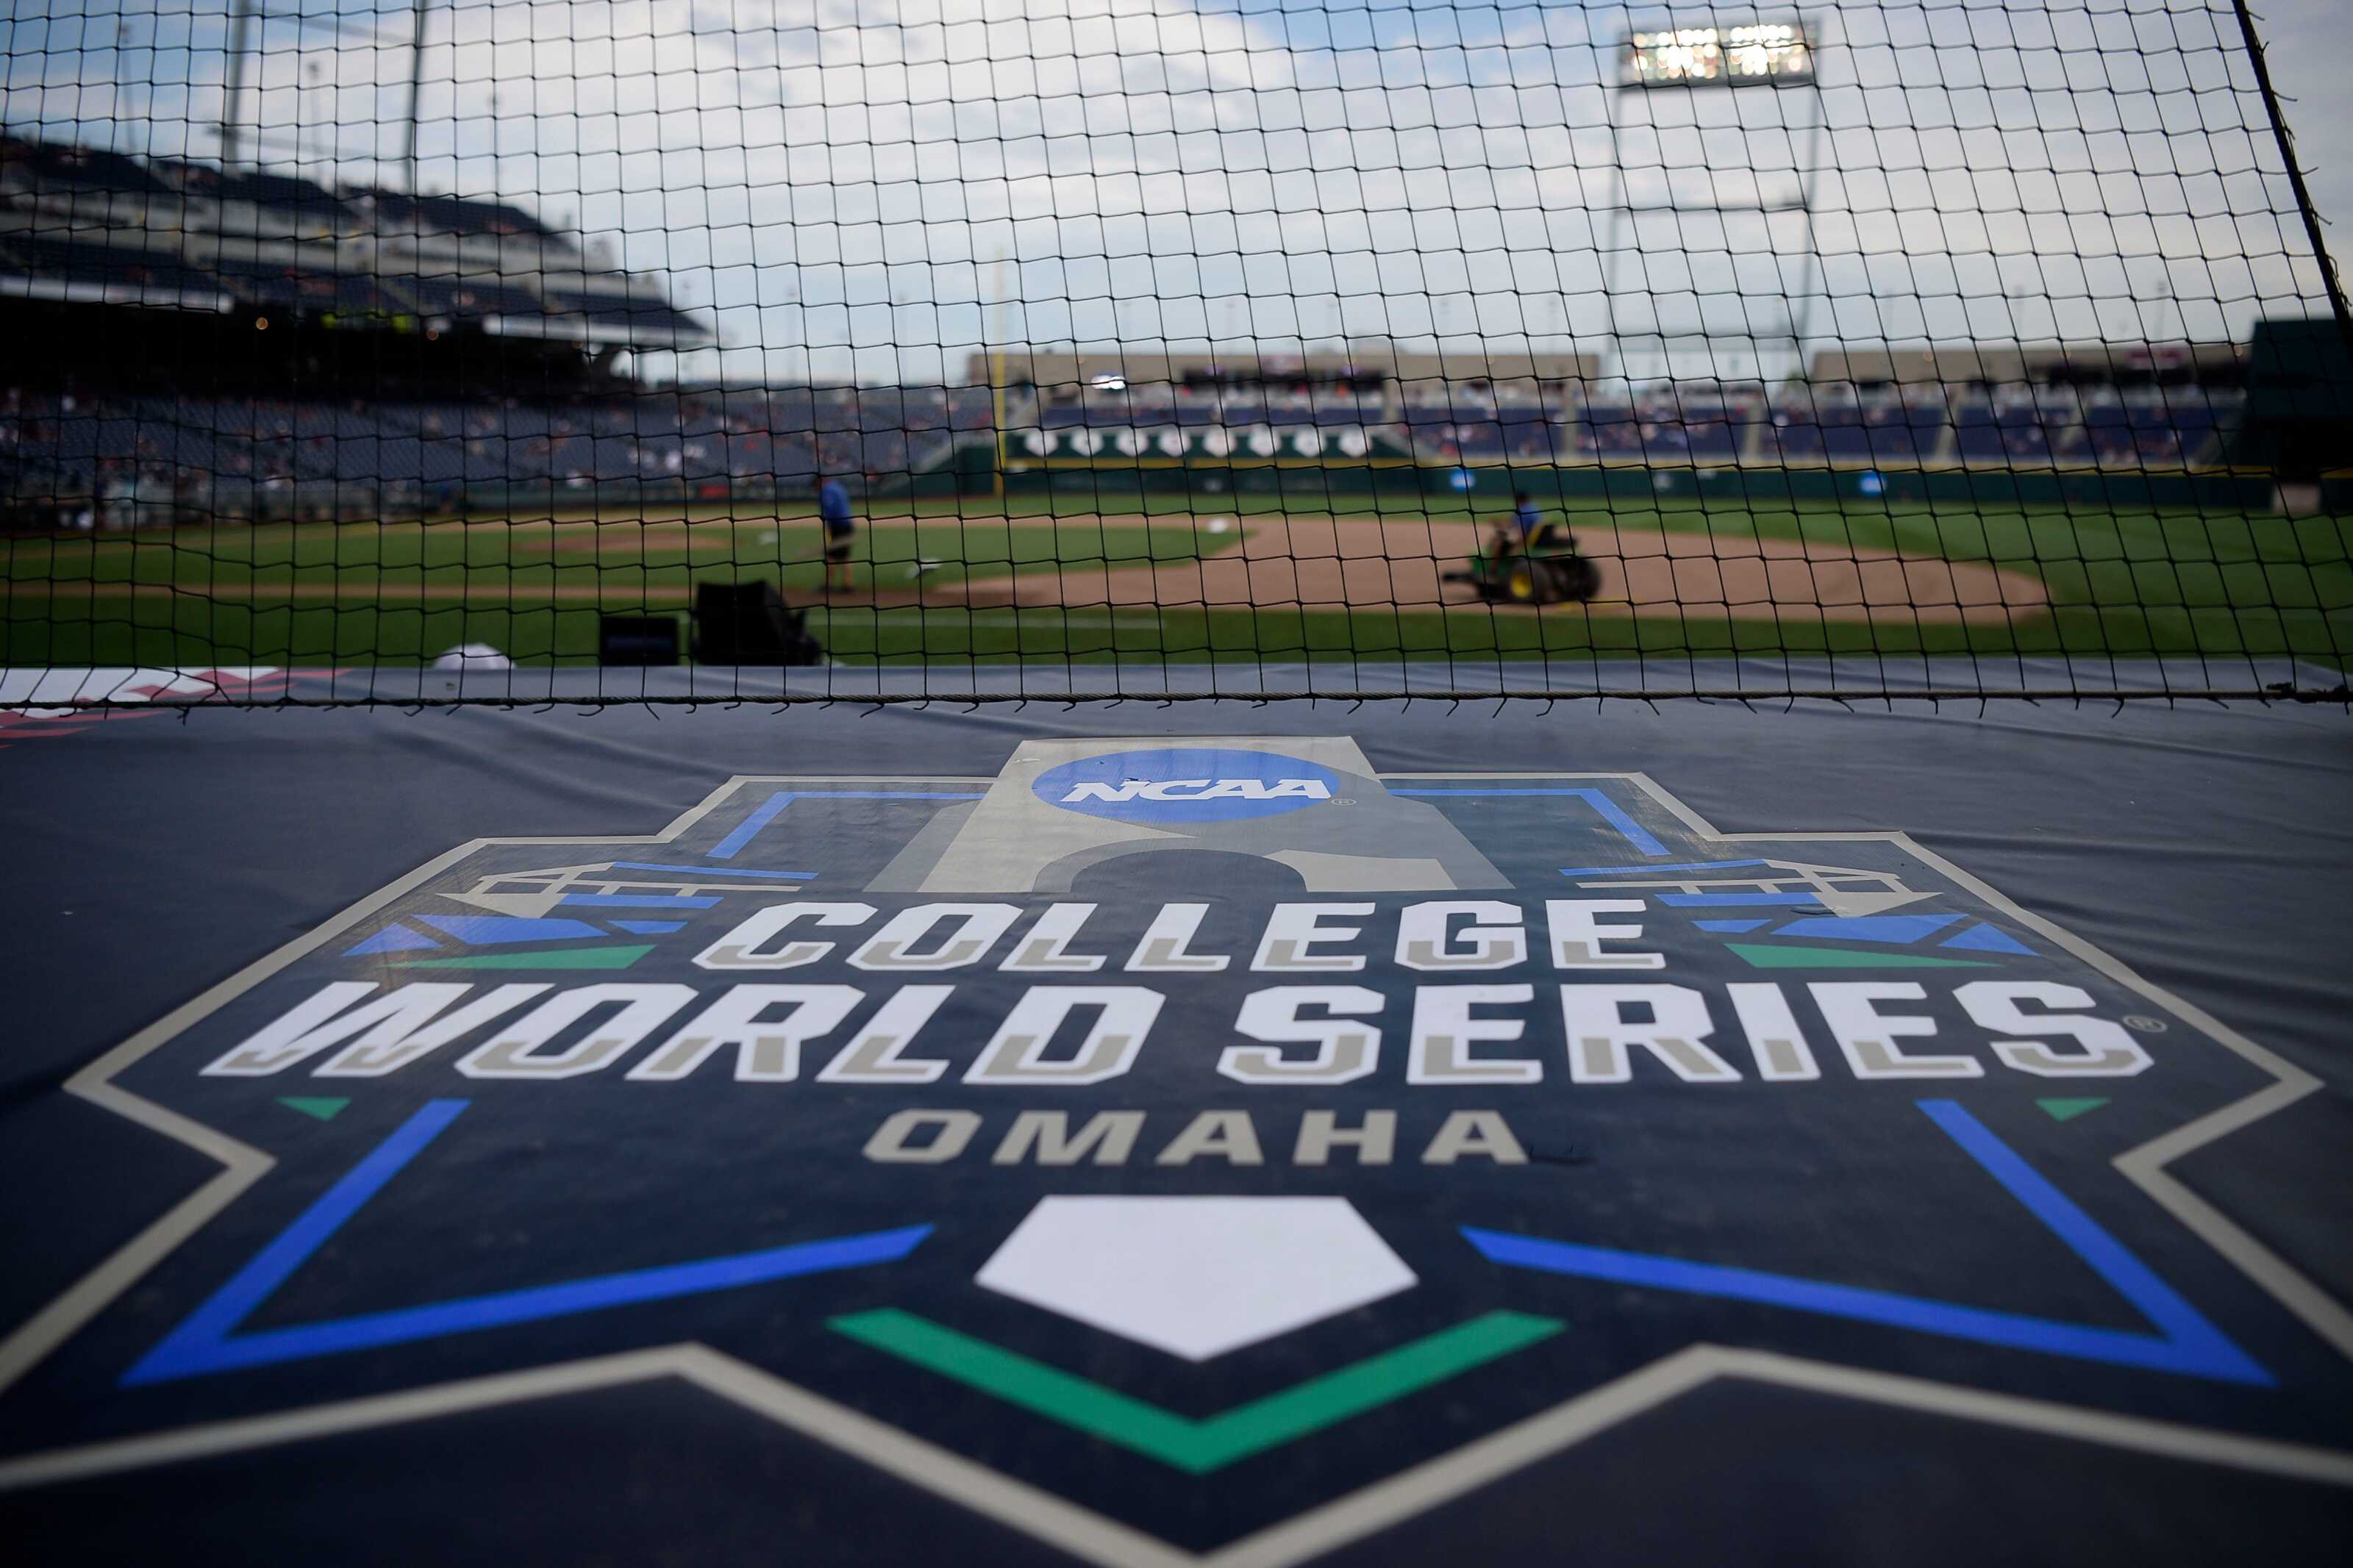 Florida, Miami earn national seeds in NCAA baseball tournament